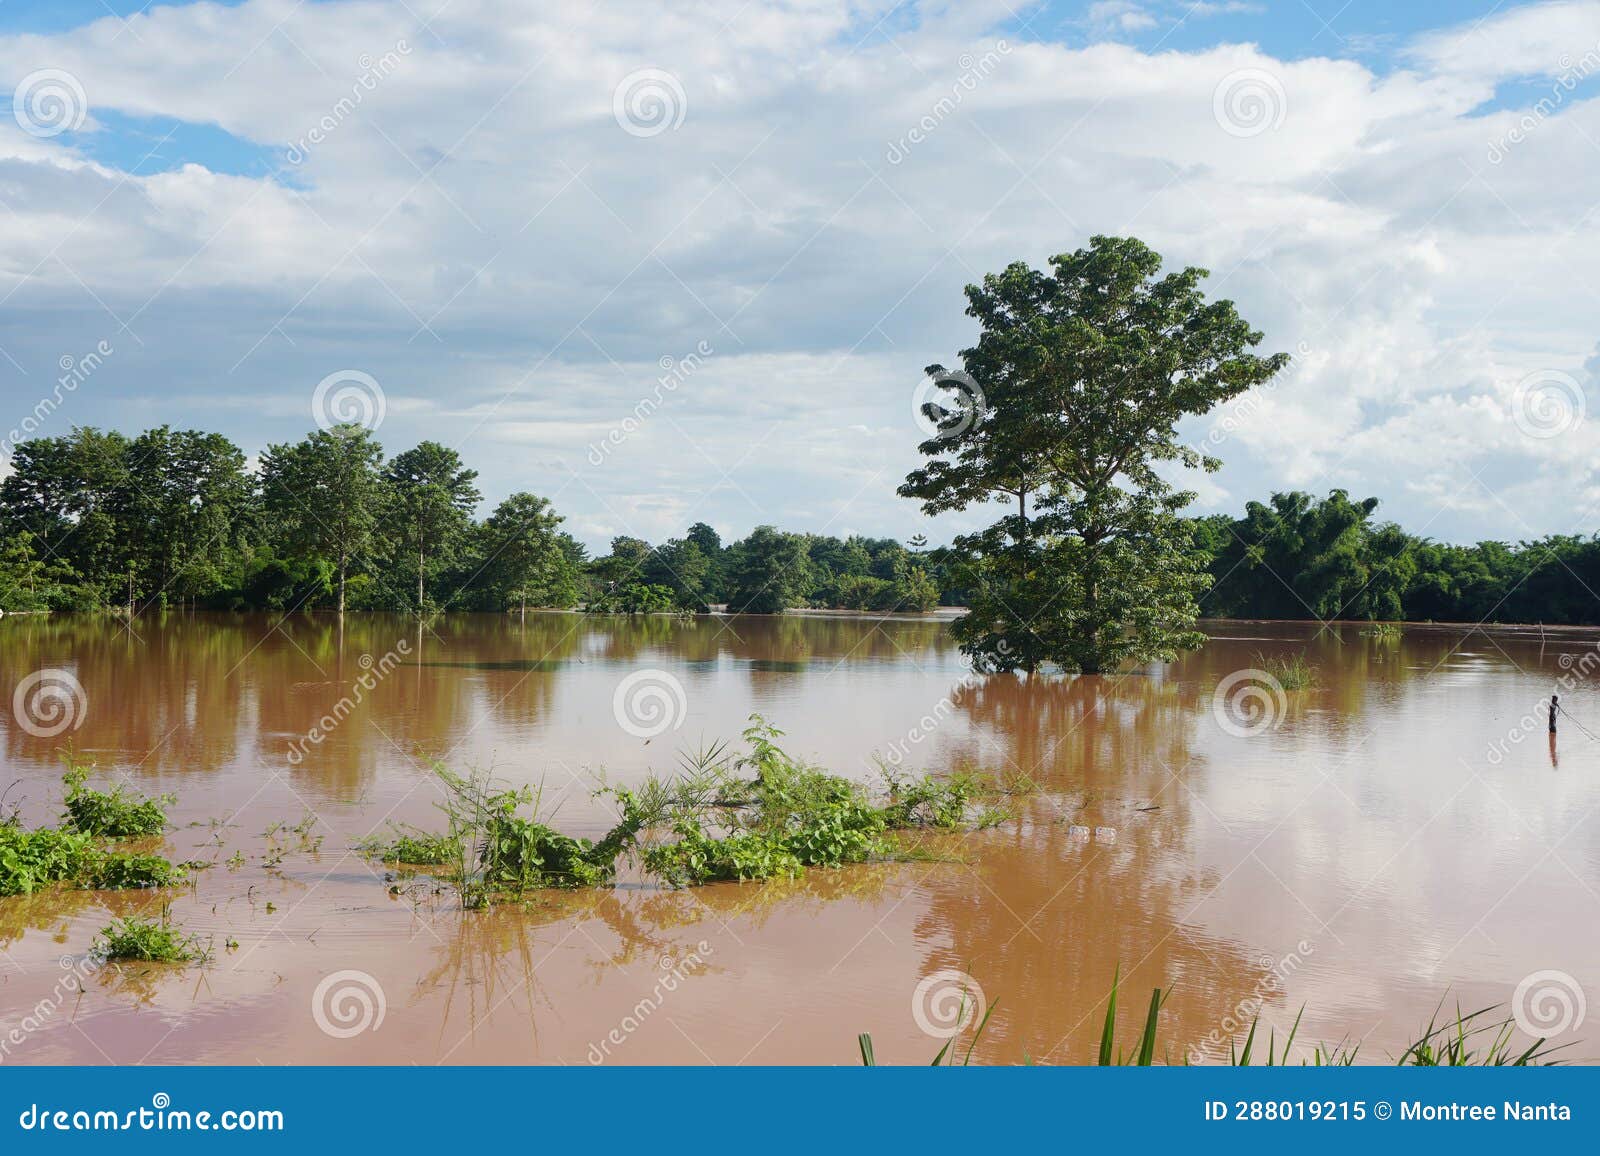 the flooding spread over a wide area. el niÃ±o and la niÃ±a phenomena. climate change.